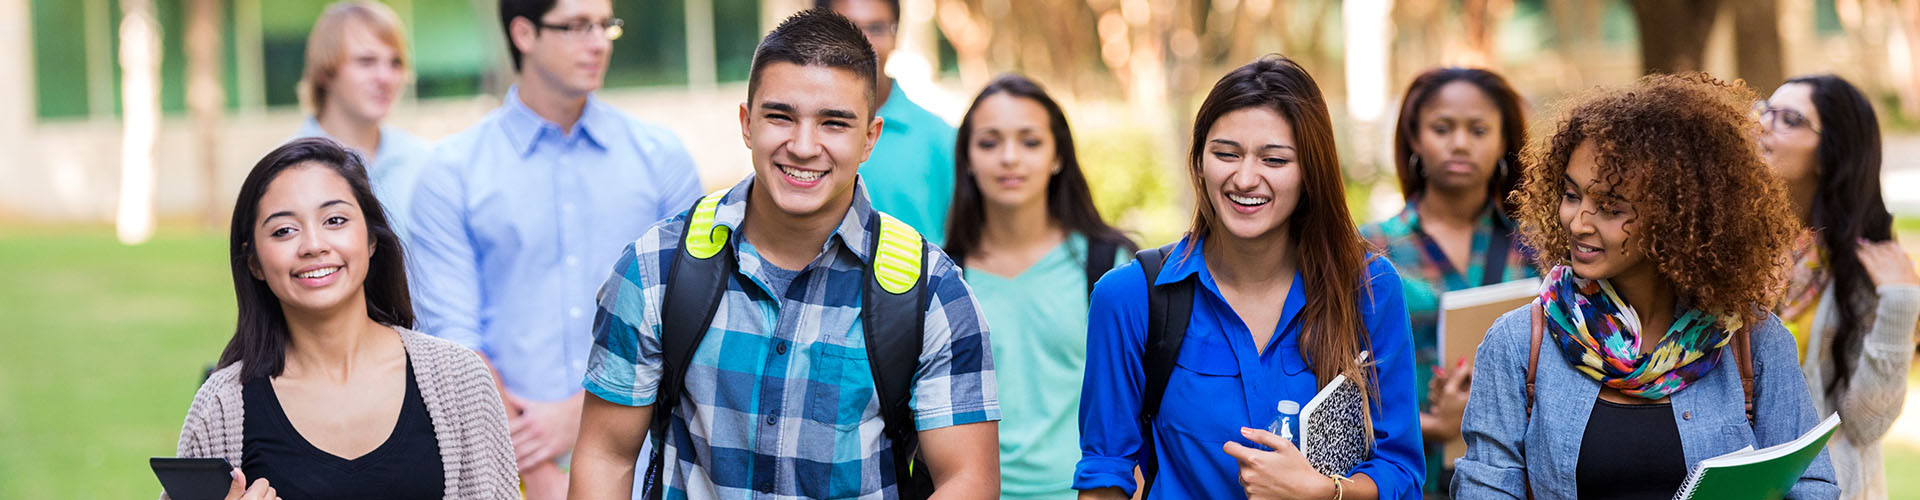 teens walking together at school